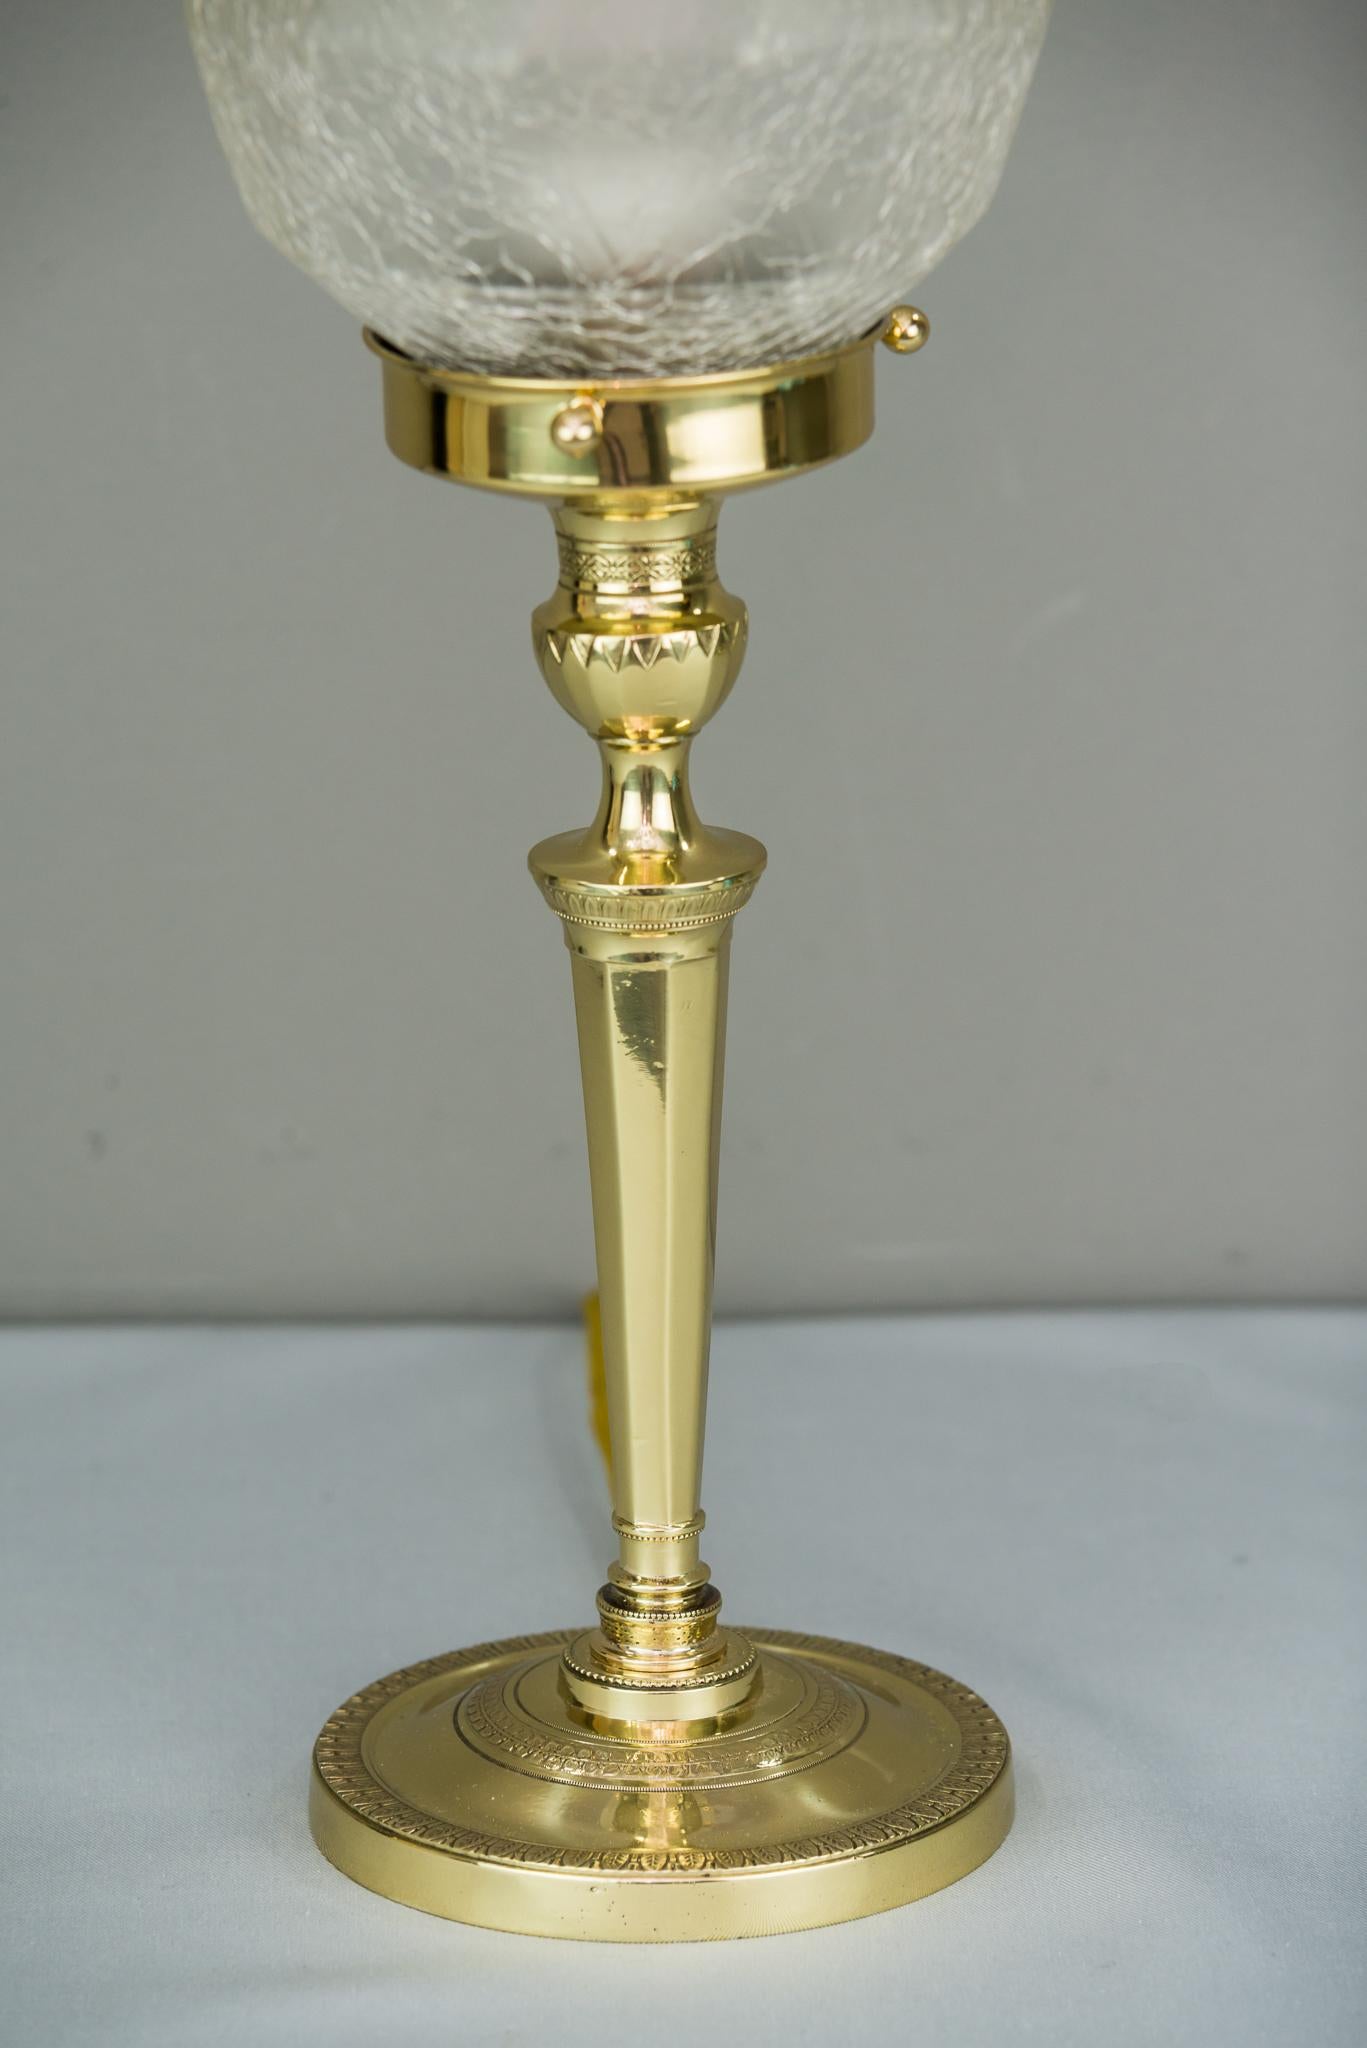 Austrian Art Deco Table Lamp with Original Glass Shade, circa 1920s